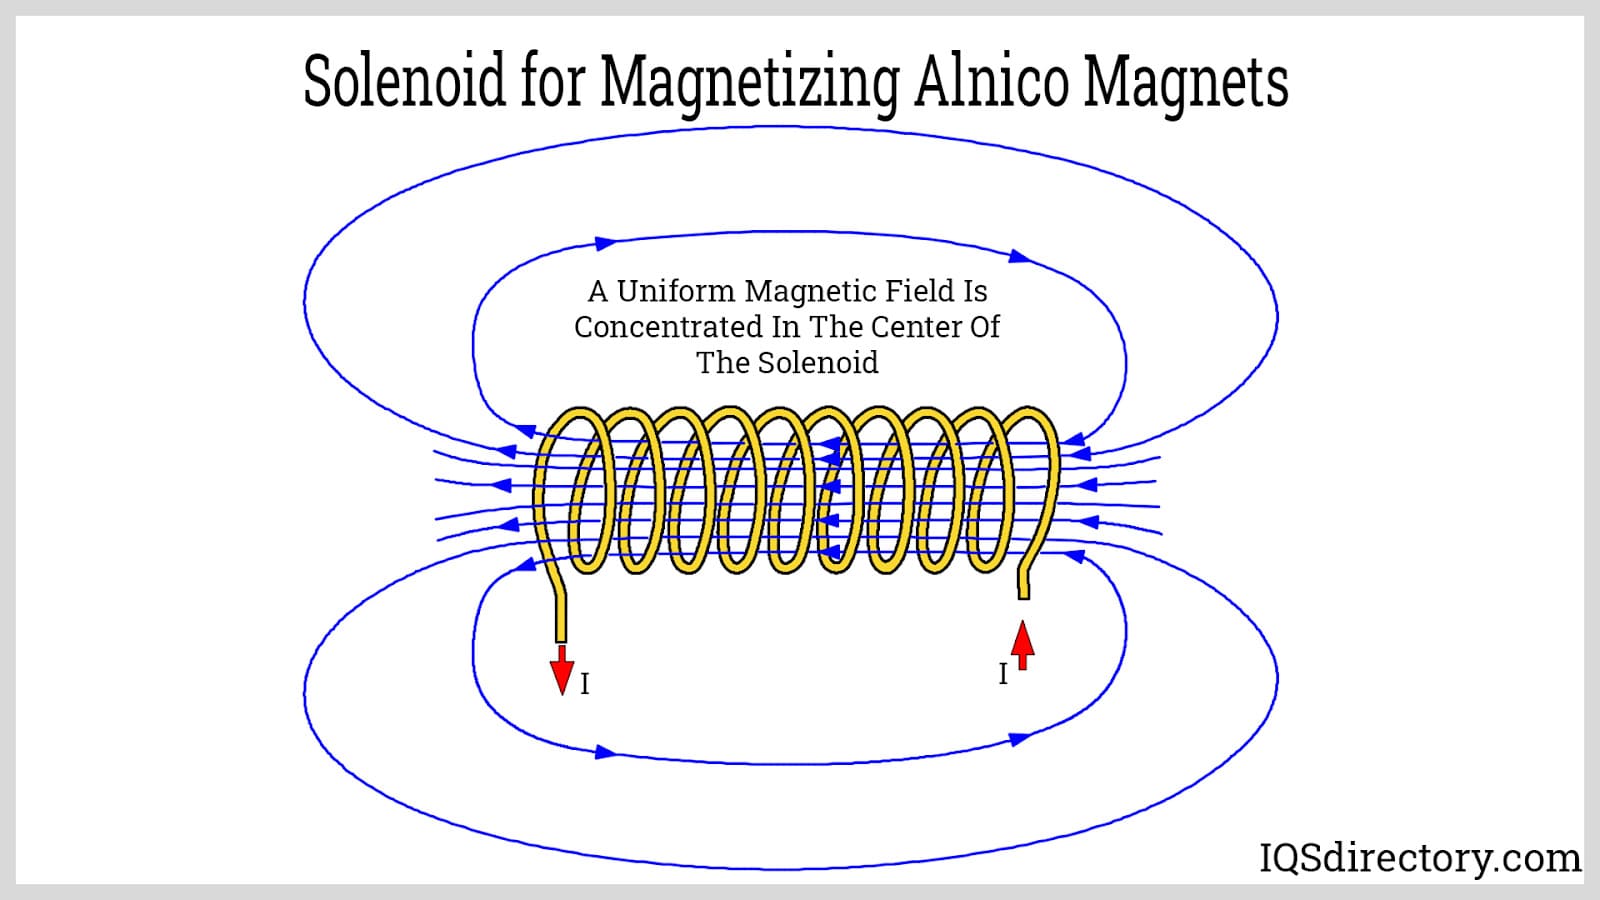 Solenoid for Magnetizing Alnico Magnets